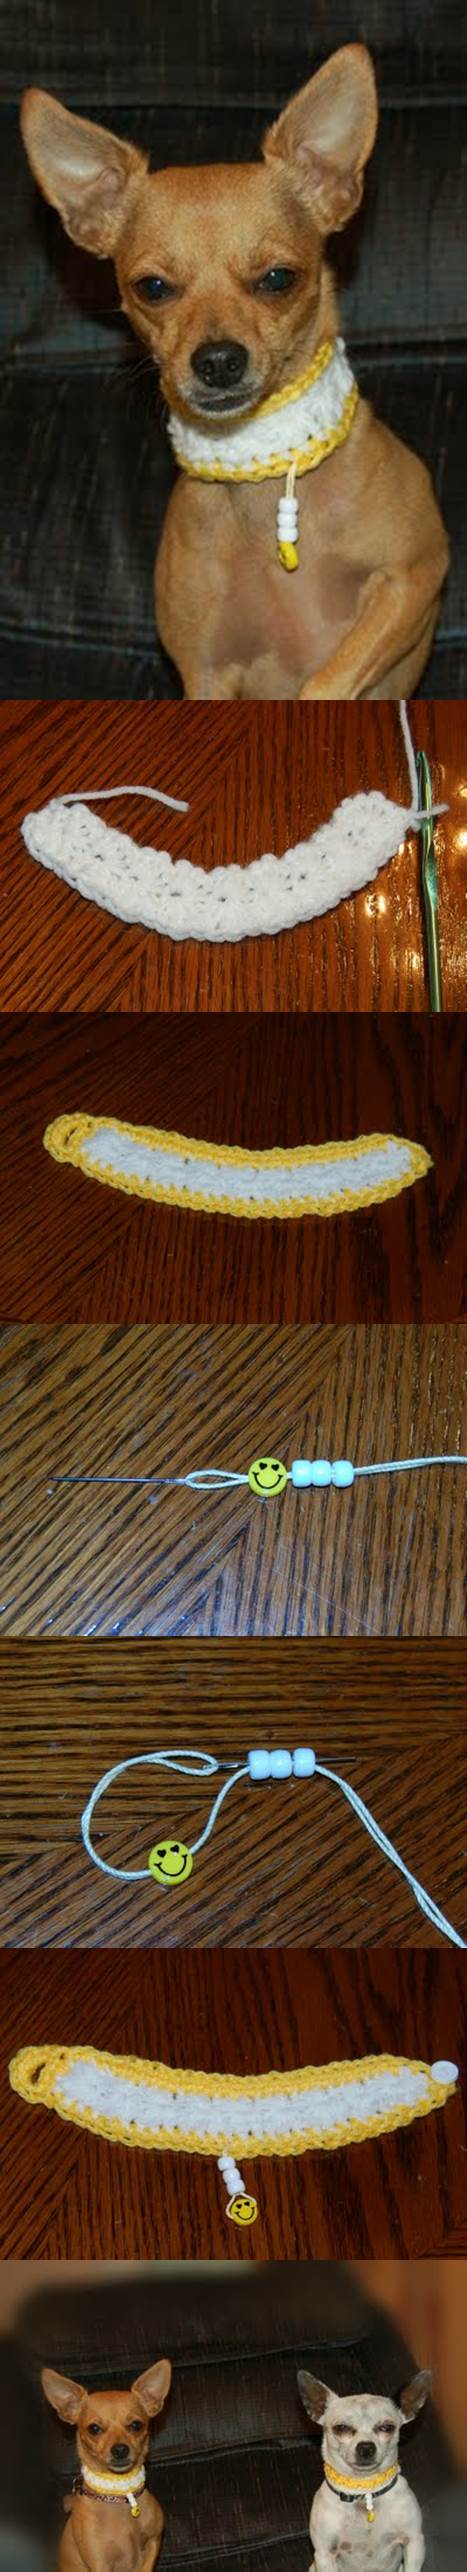 DIY Smiles Crochet Dog Collar 2